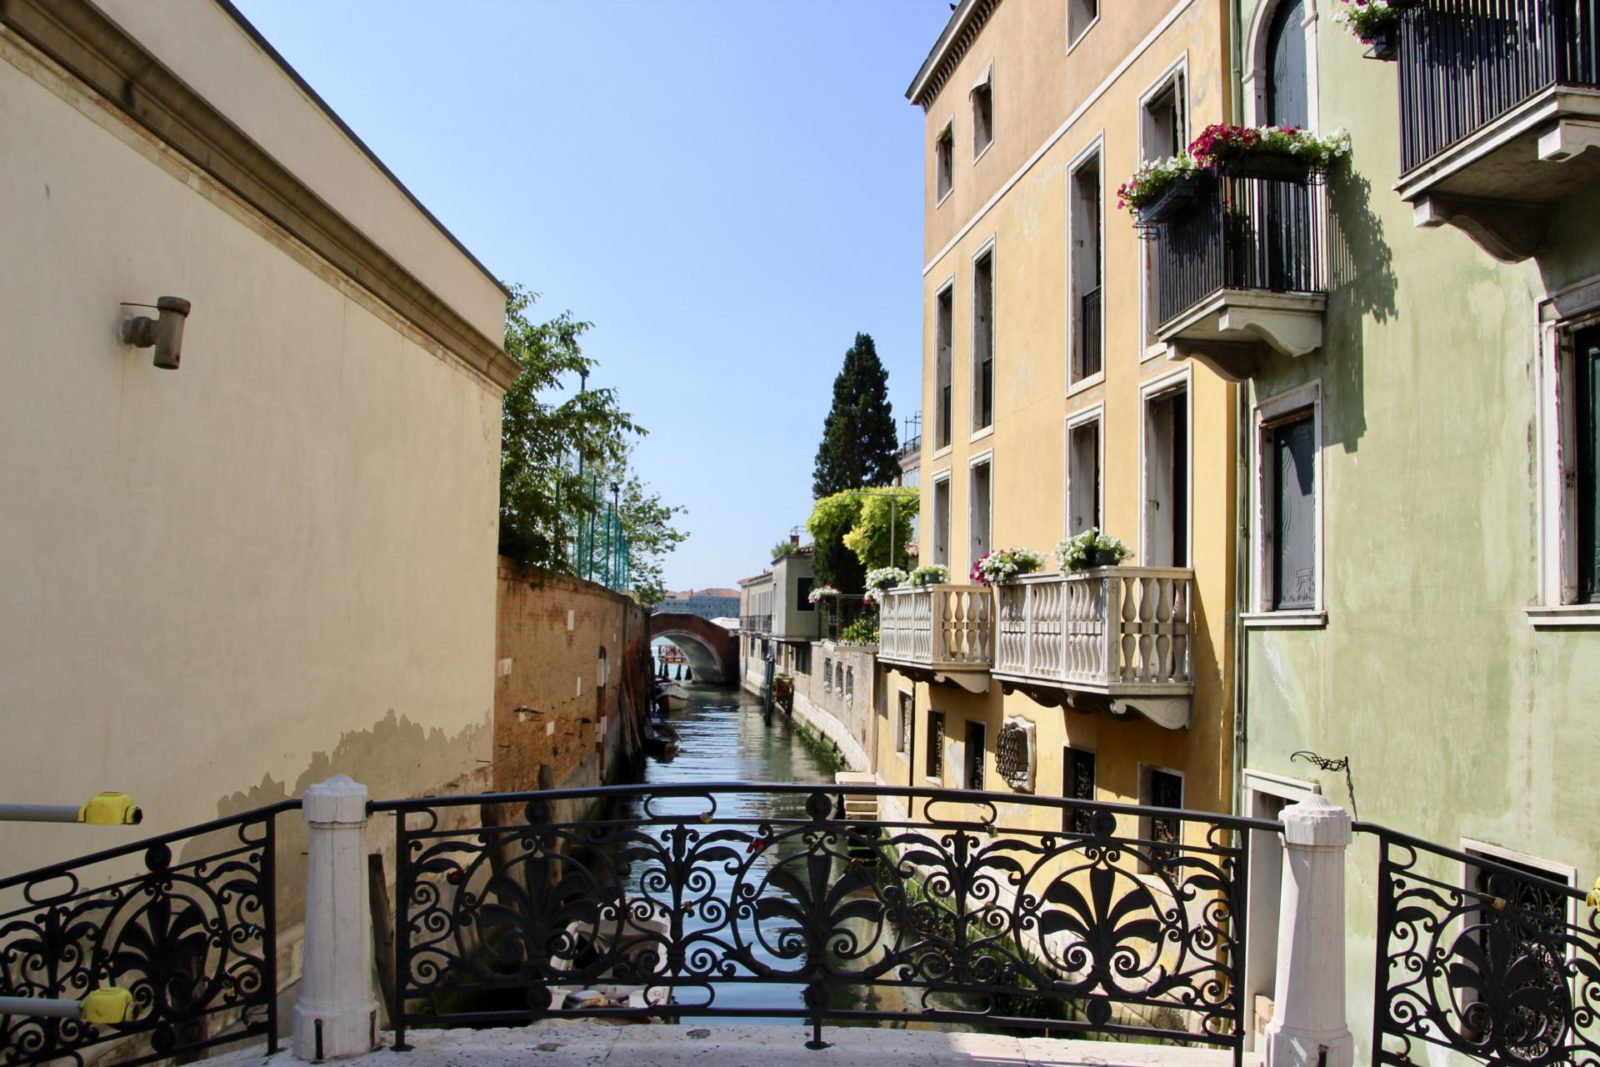 La Dolce Vita for Less in Venice